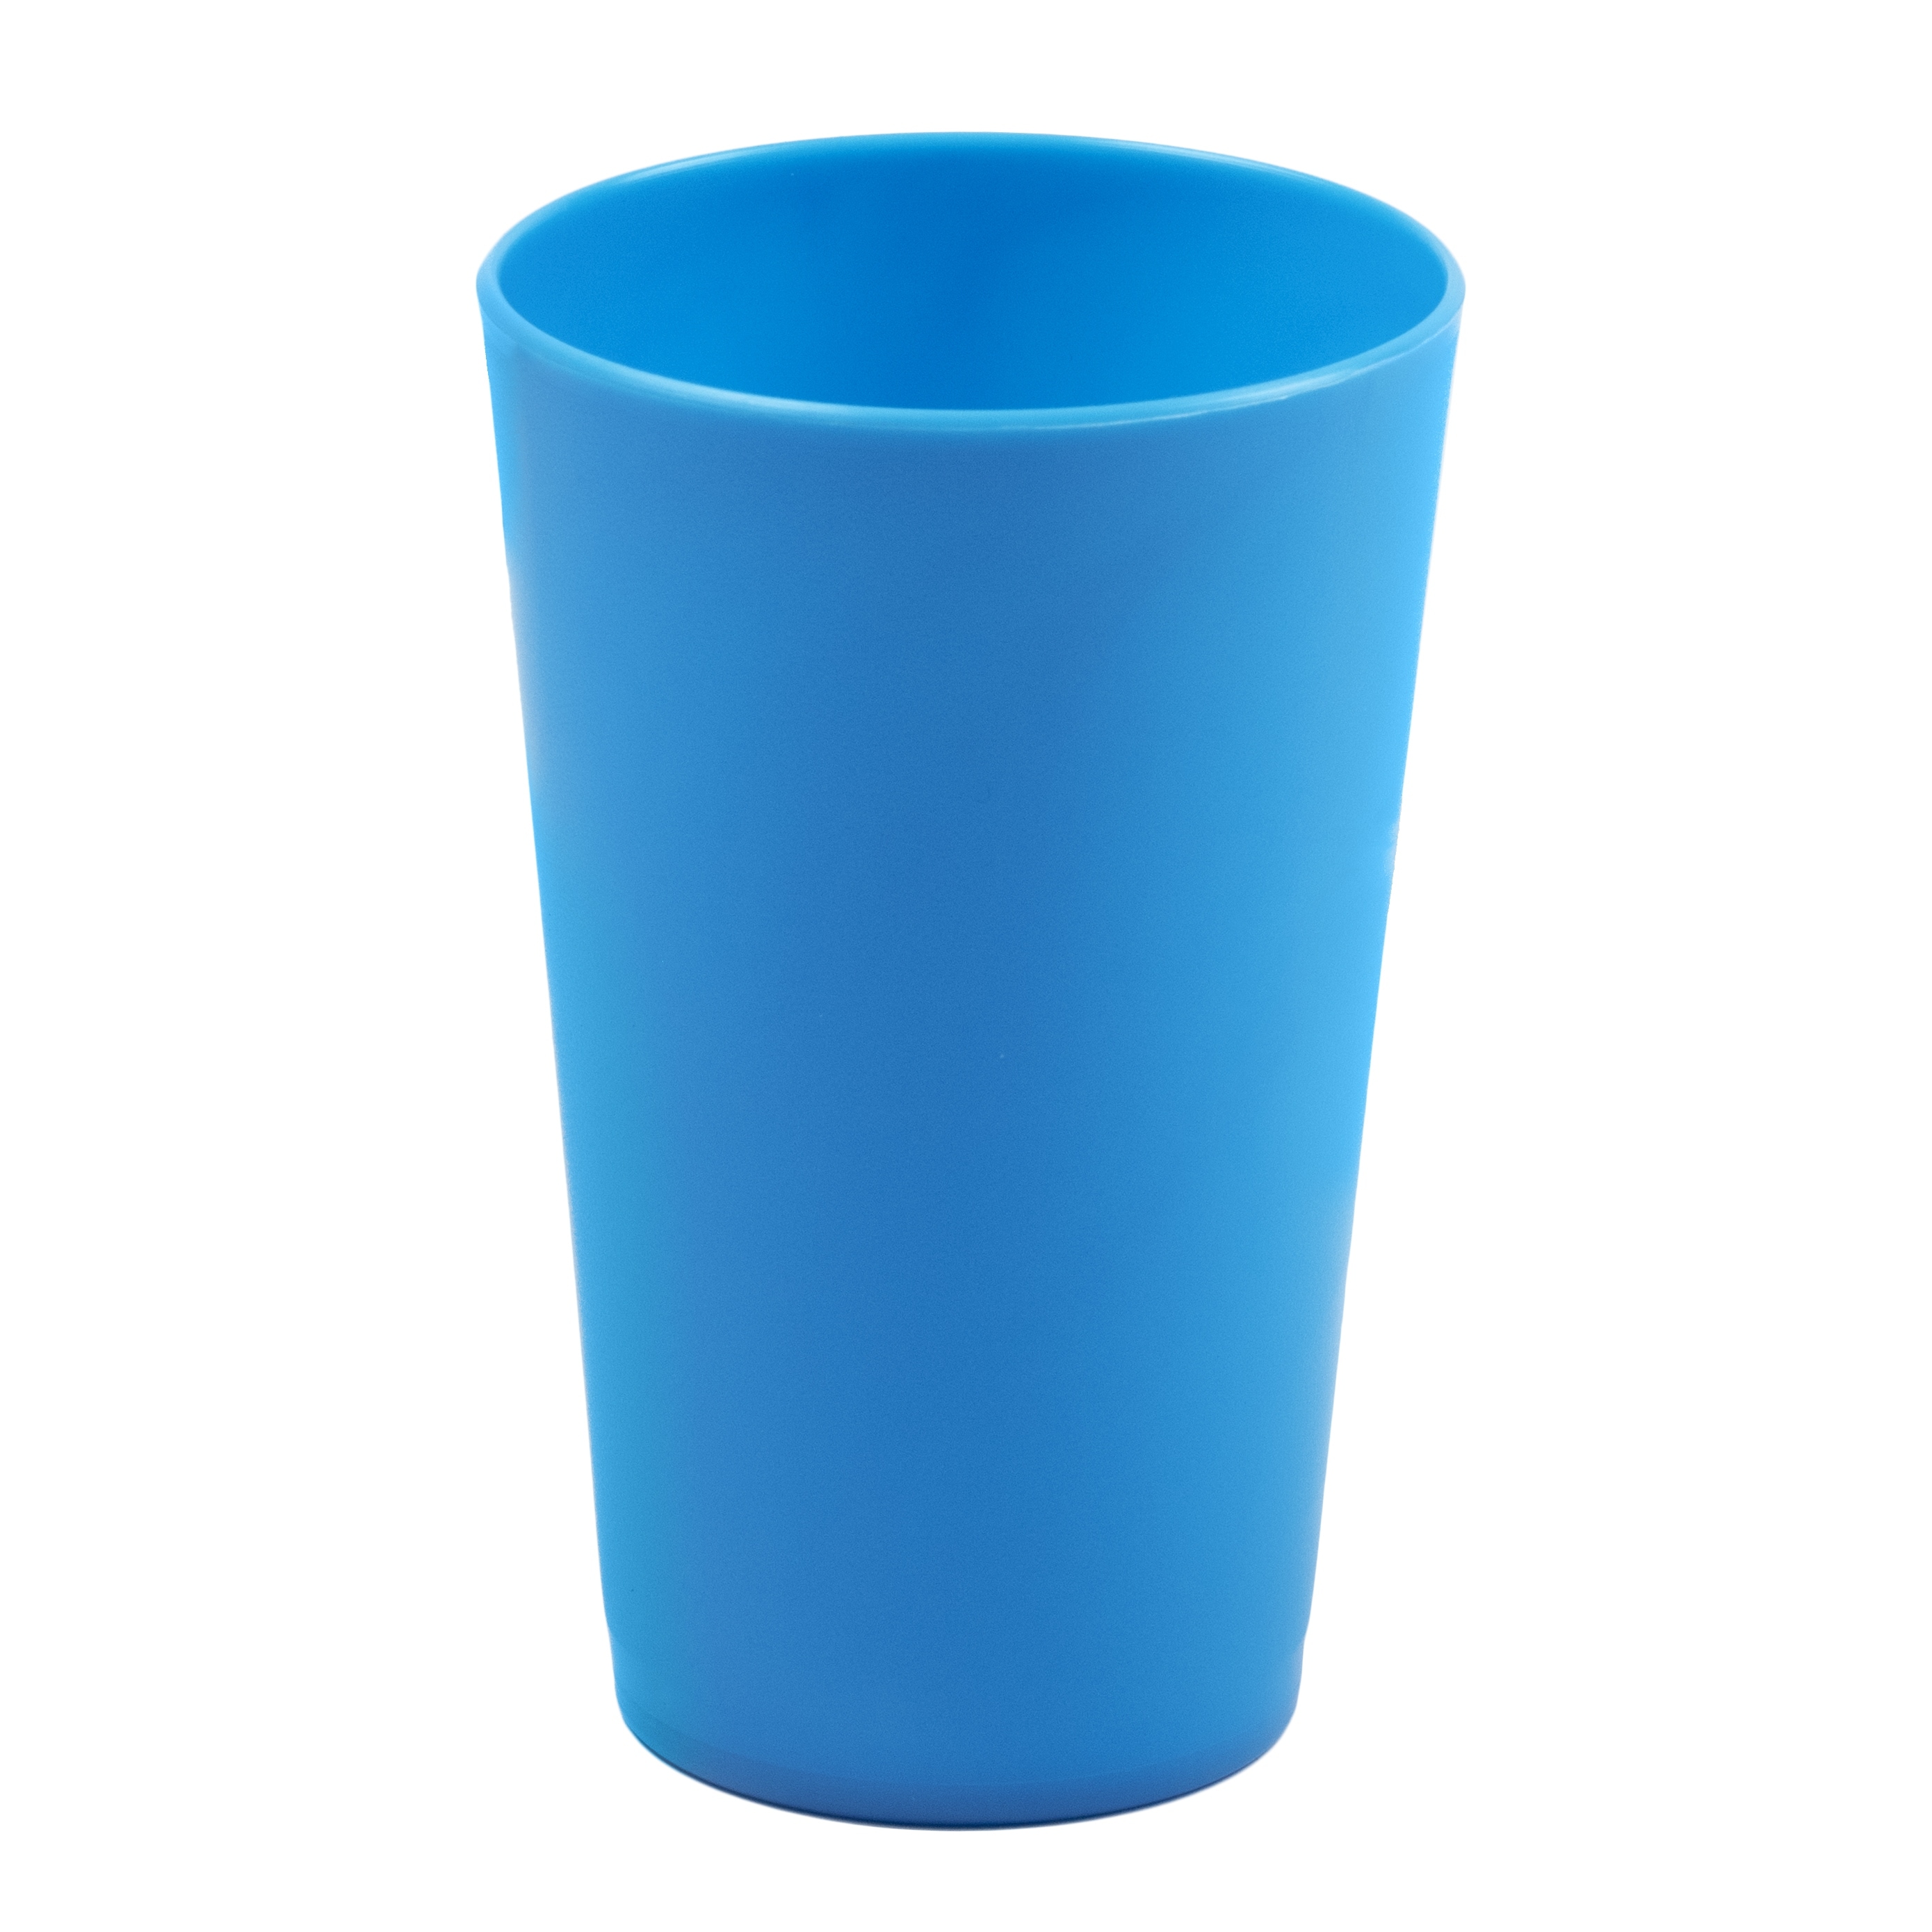 https://ak1.ostkcdn.com/images/products/is/images/direct/37aa6d0ebfa14bc5cd78ef3f8bffbd166e609a63/Break-Resistant-Plastic-Cups-10oz%2C-Reusable-Design%2C-34-1131-blue.jpg